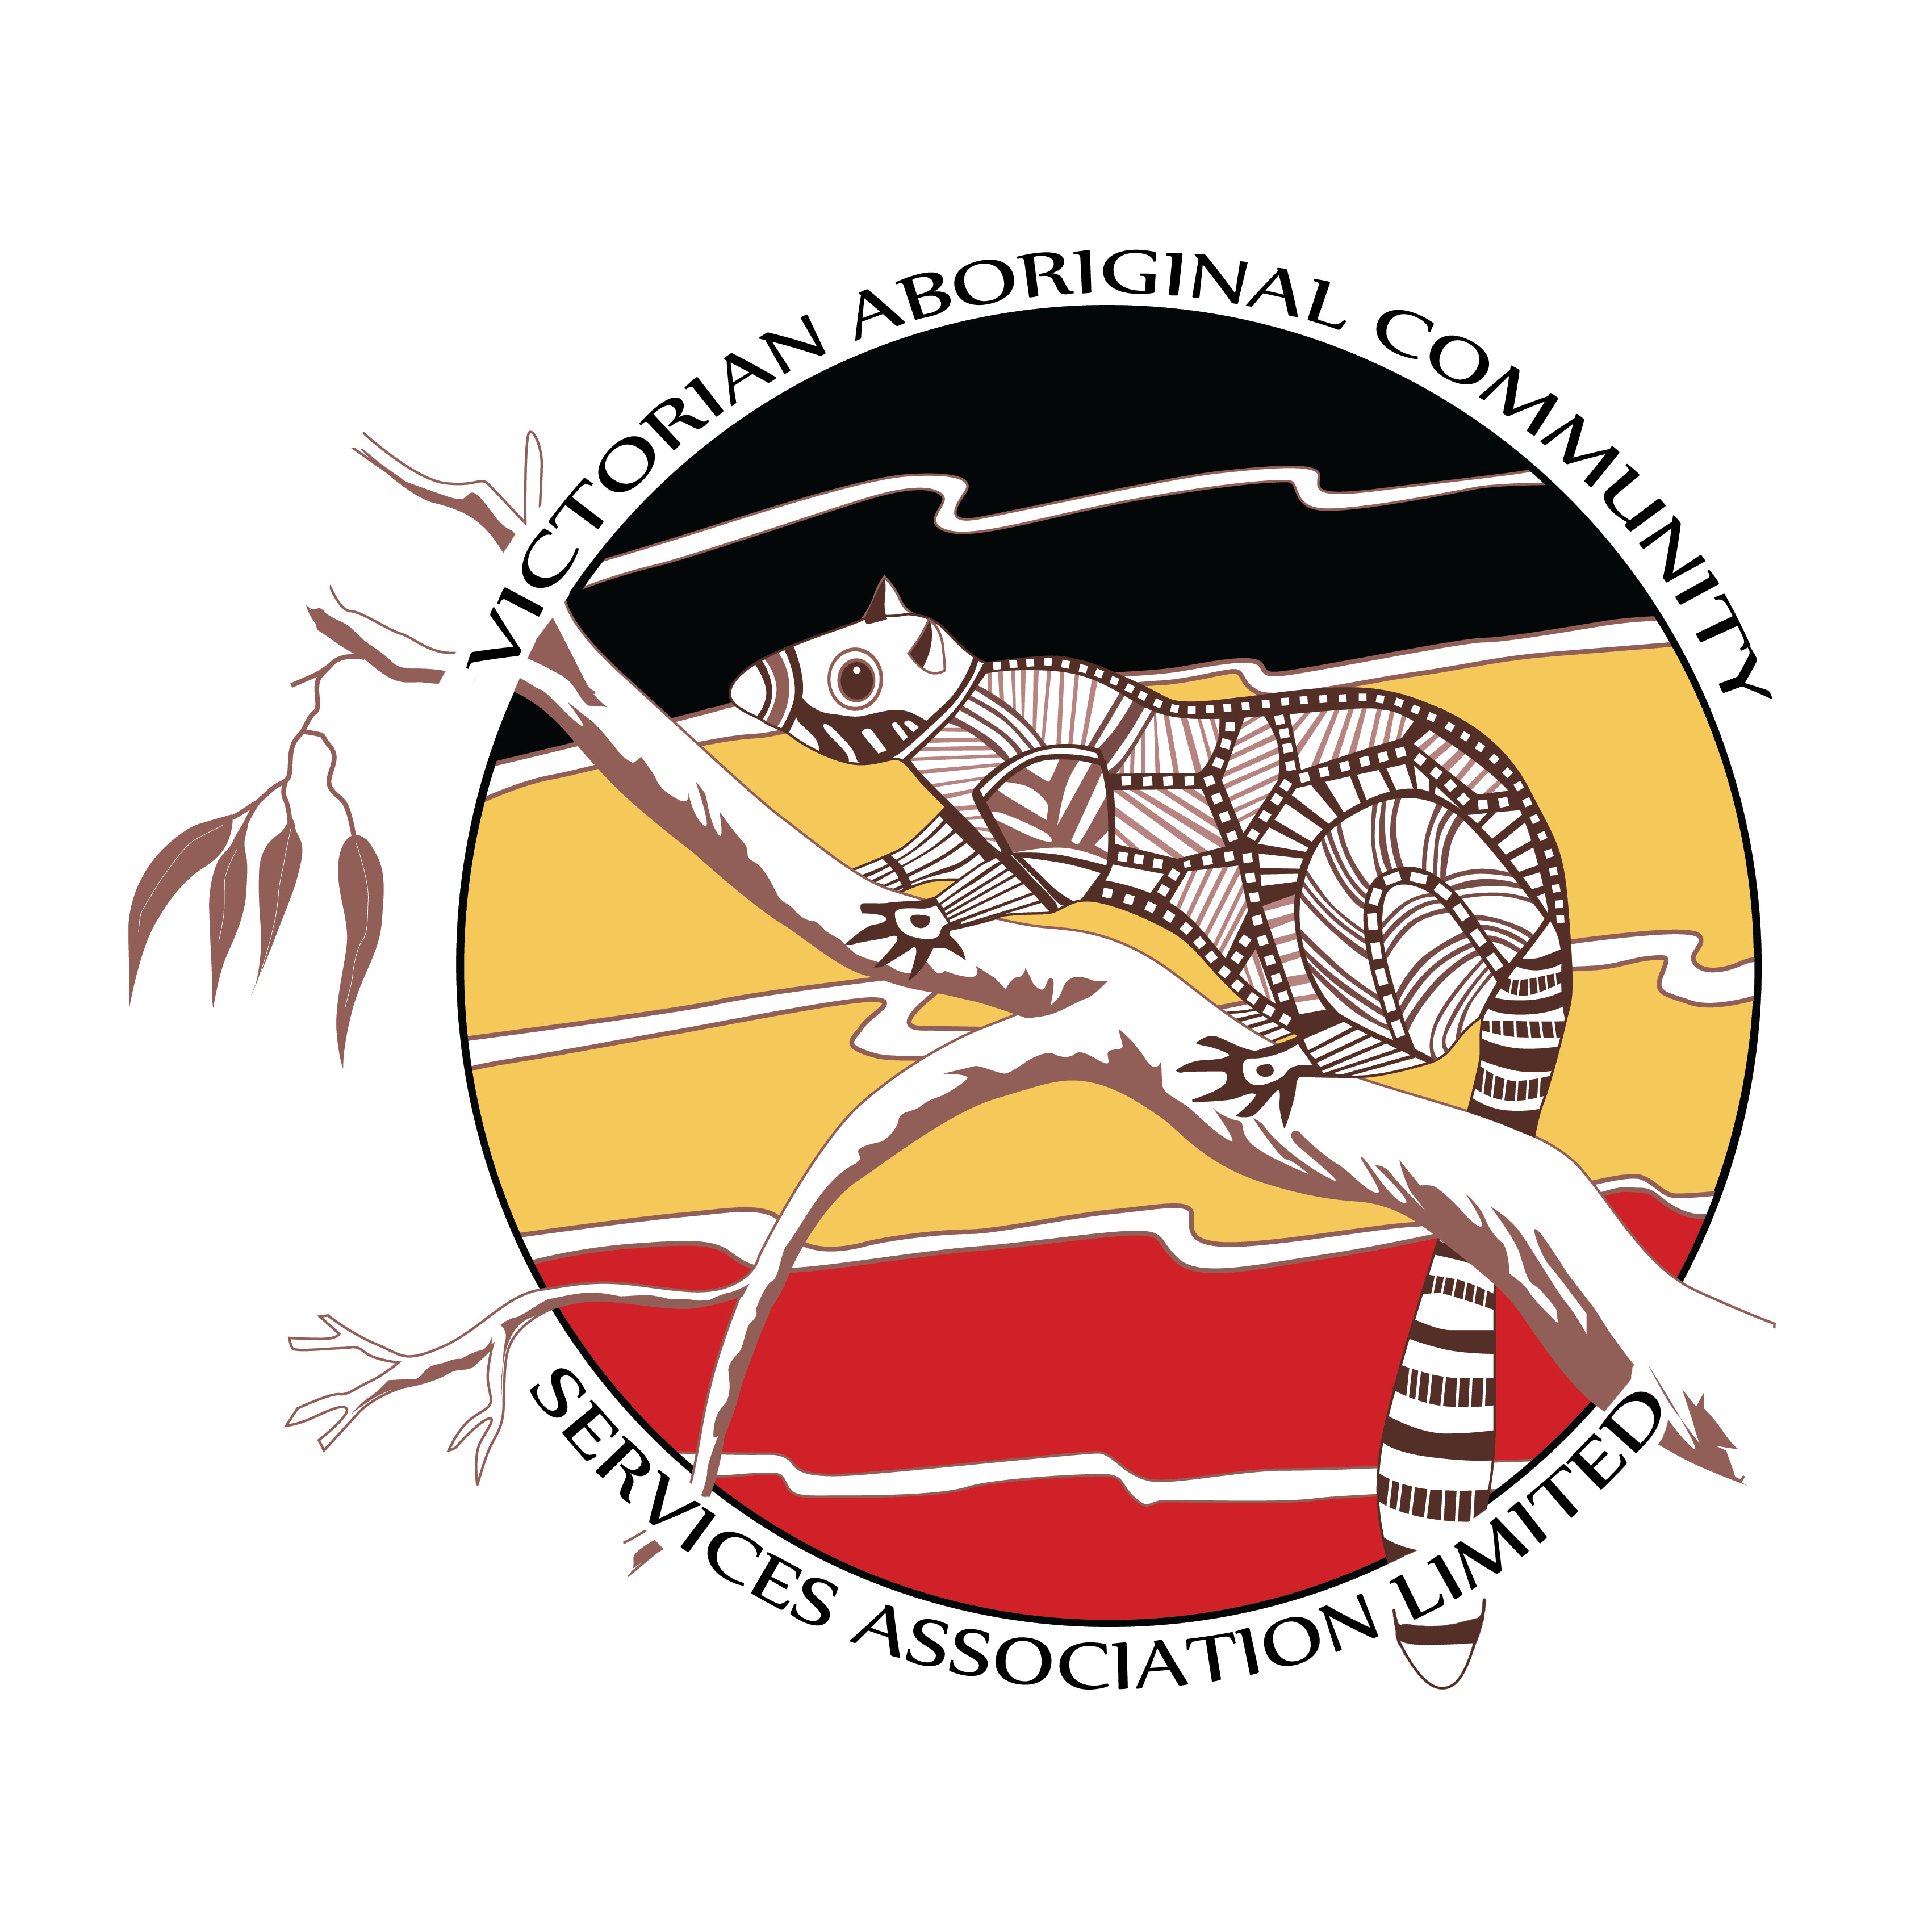 Aboriginal Community Services Association Limited logo